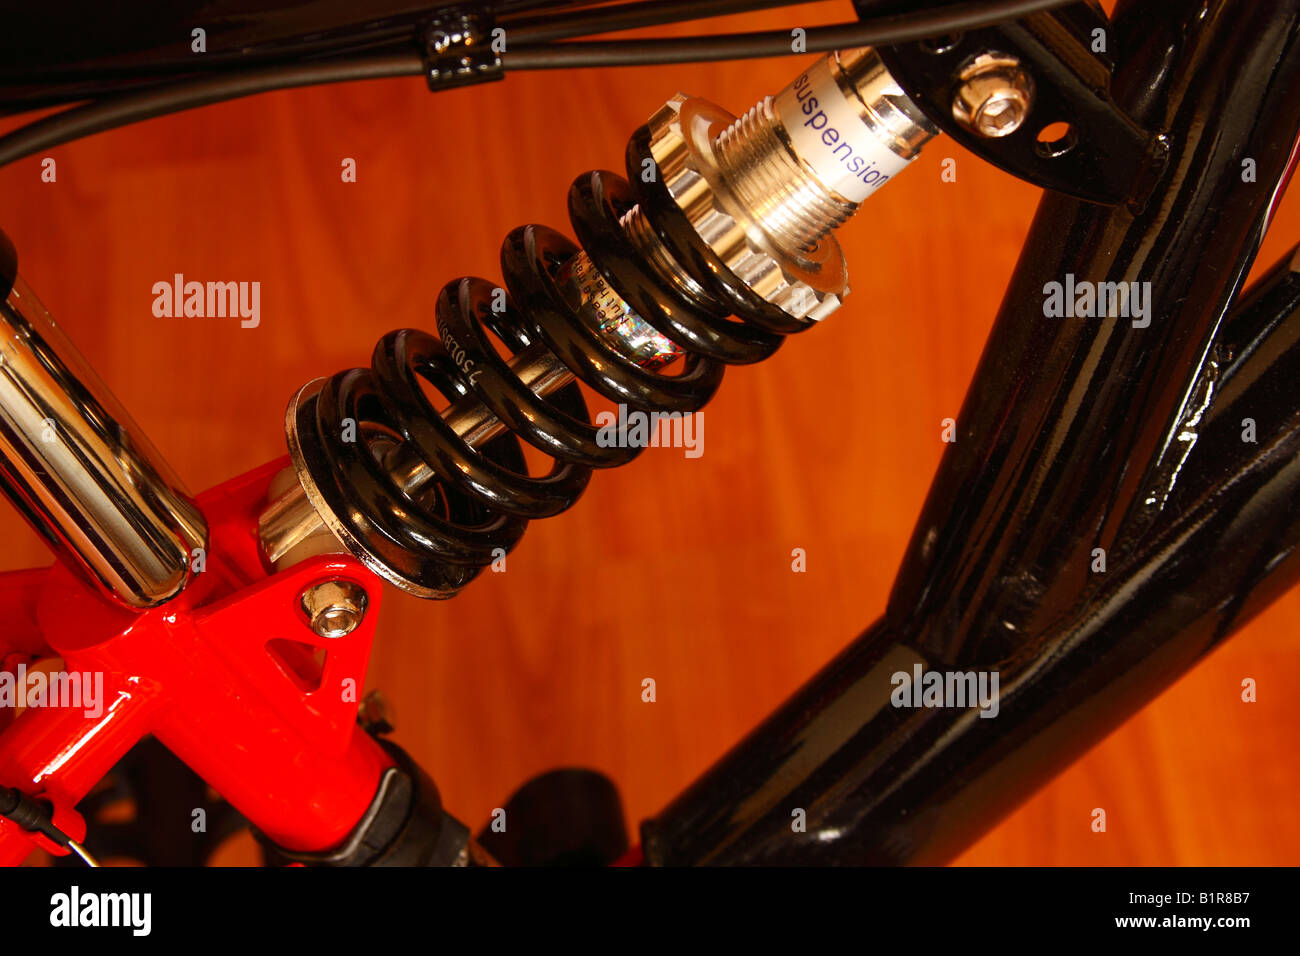 Suspensión mecánica fotografías e imágenes de alta resolución - Alamy